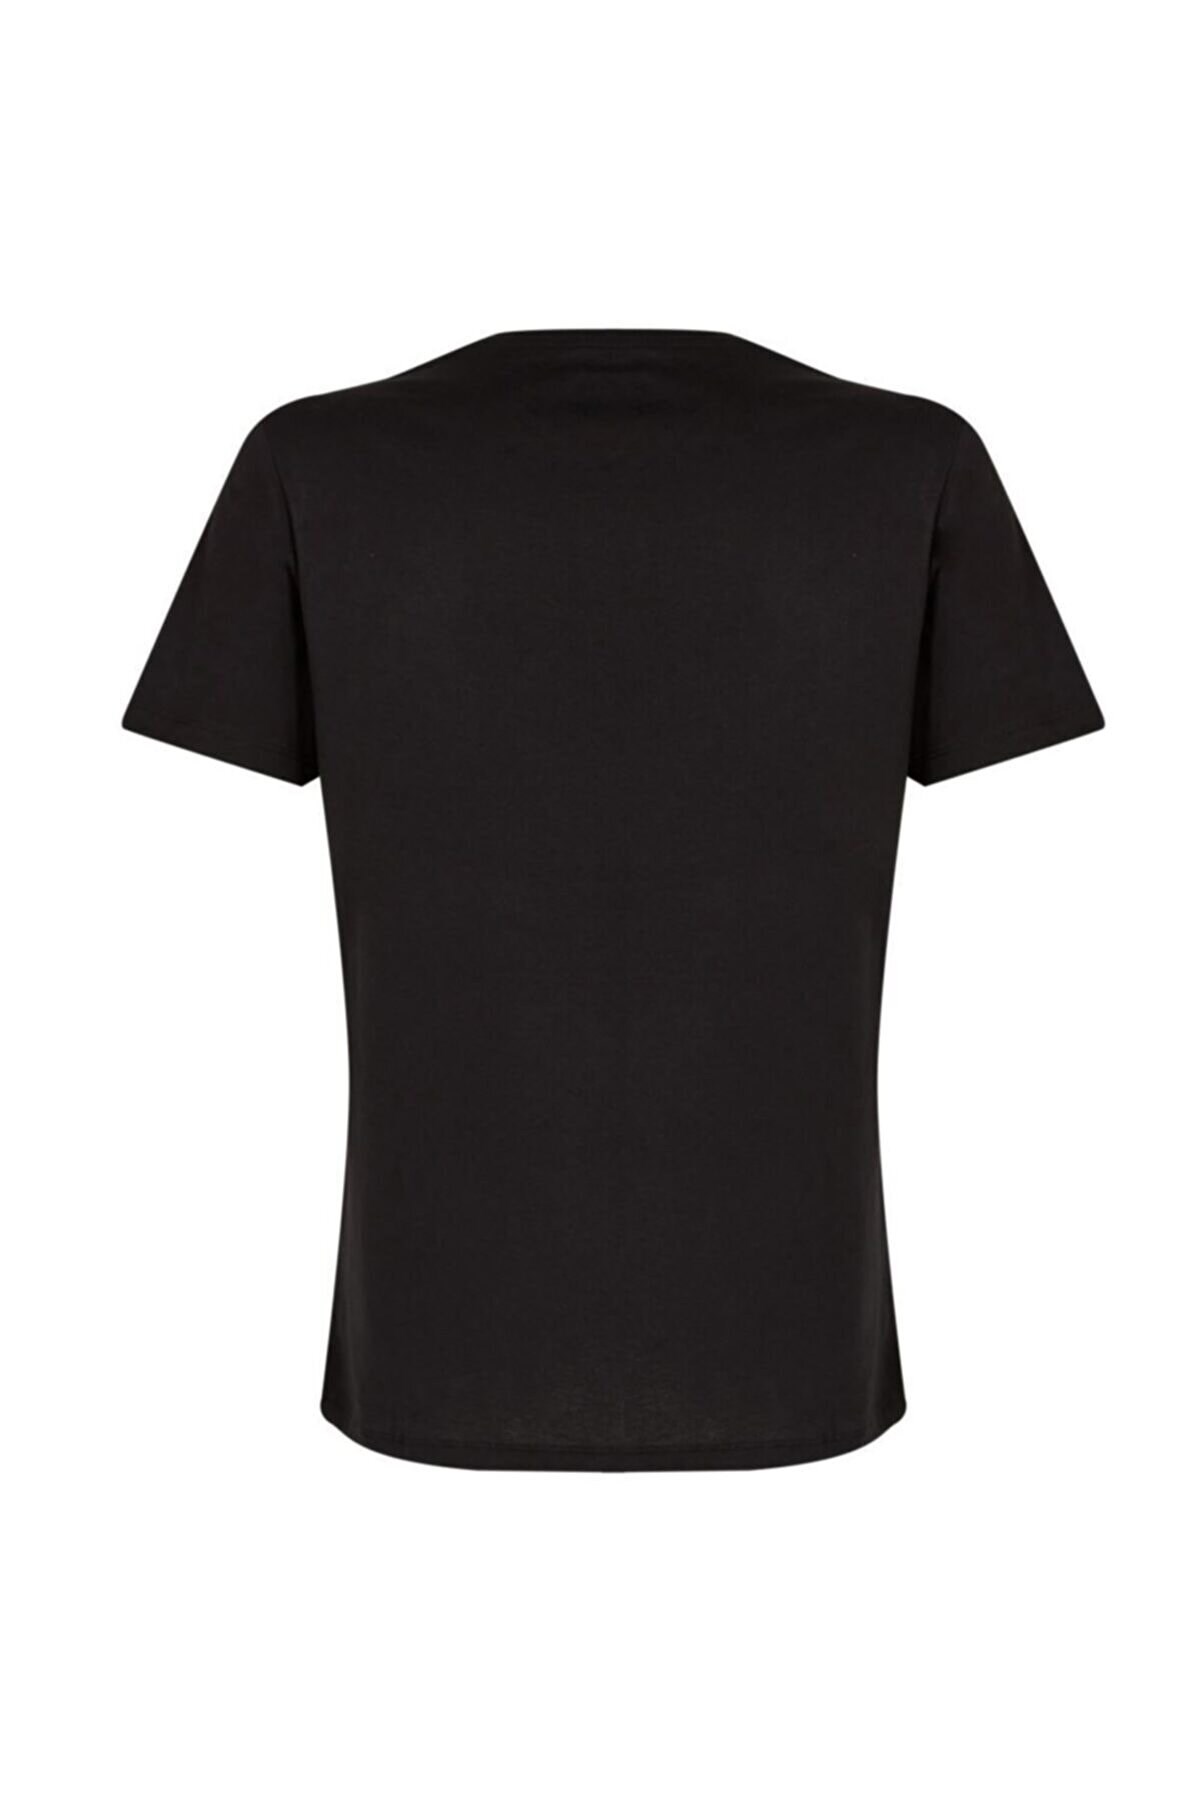 New Balance Erkek T-Shirt MNT1234-BK Black